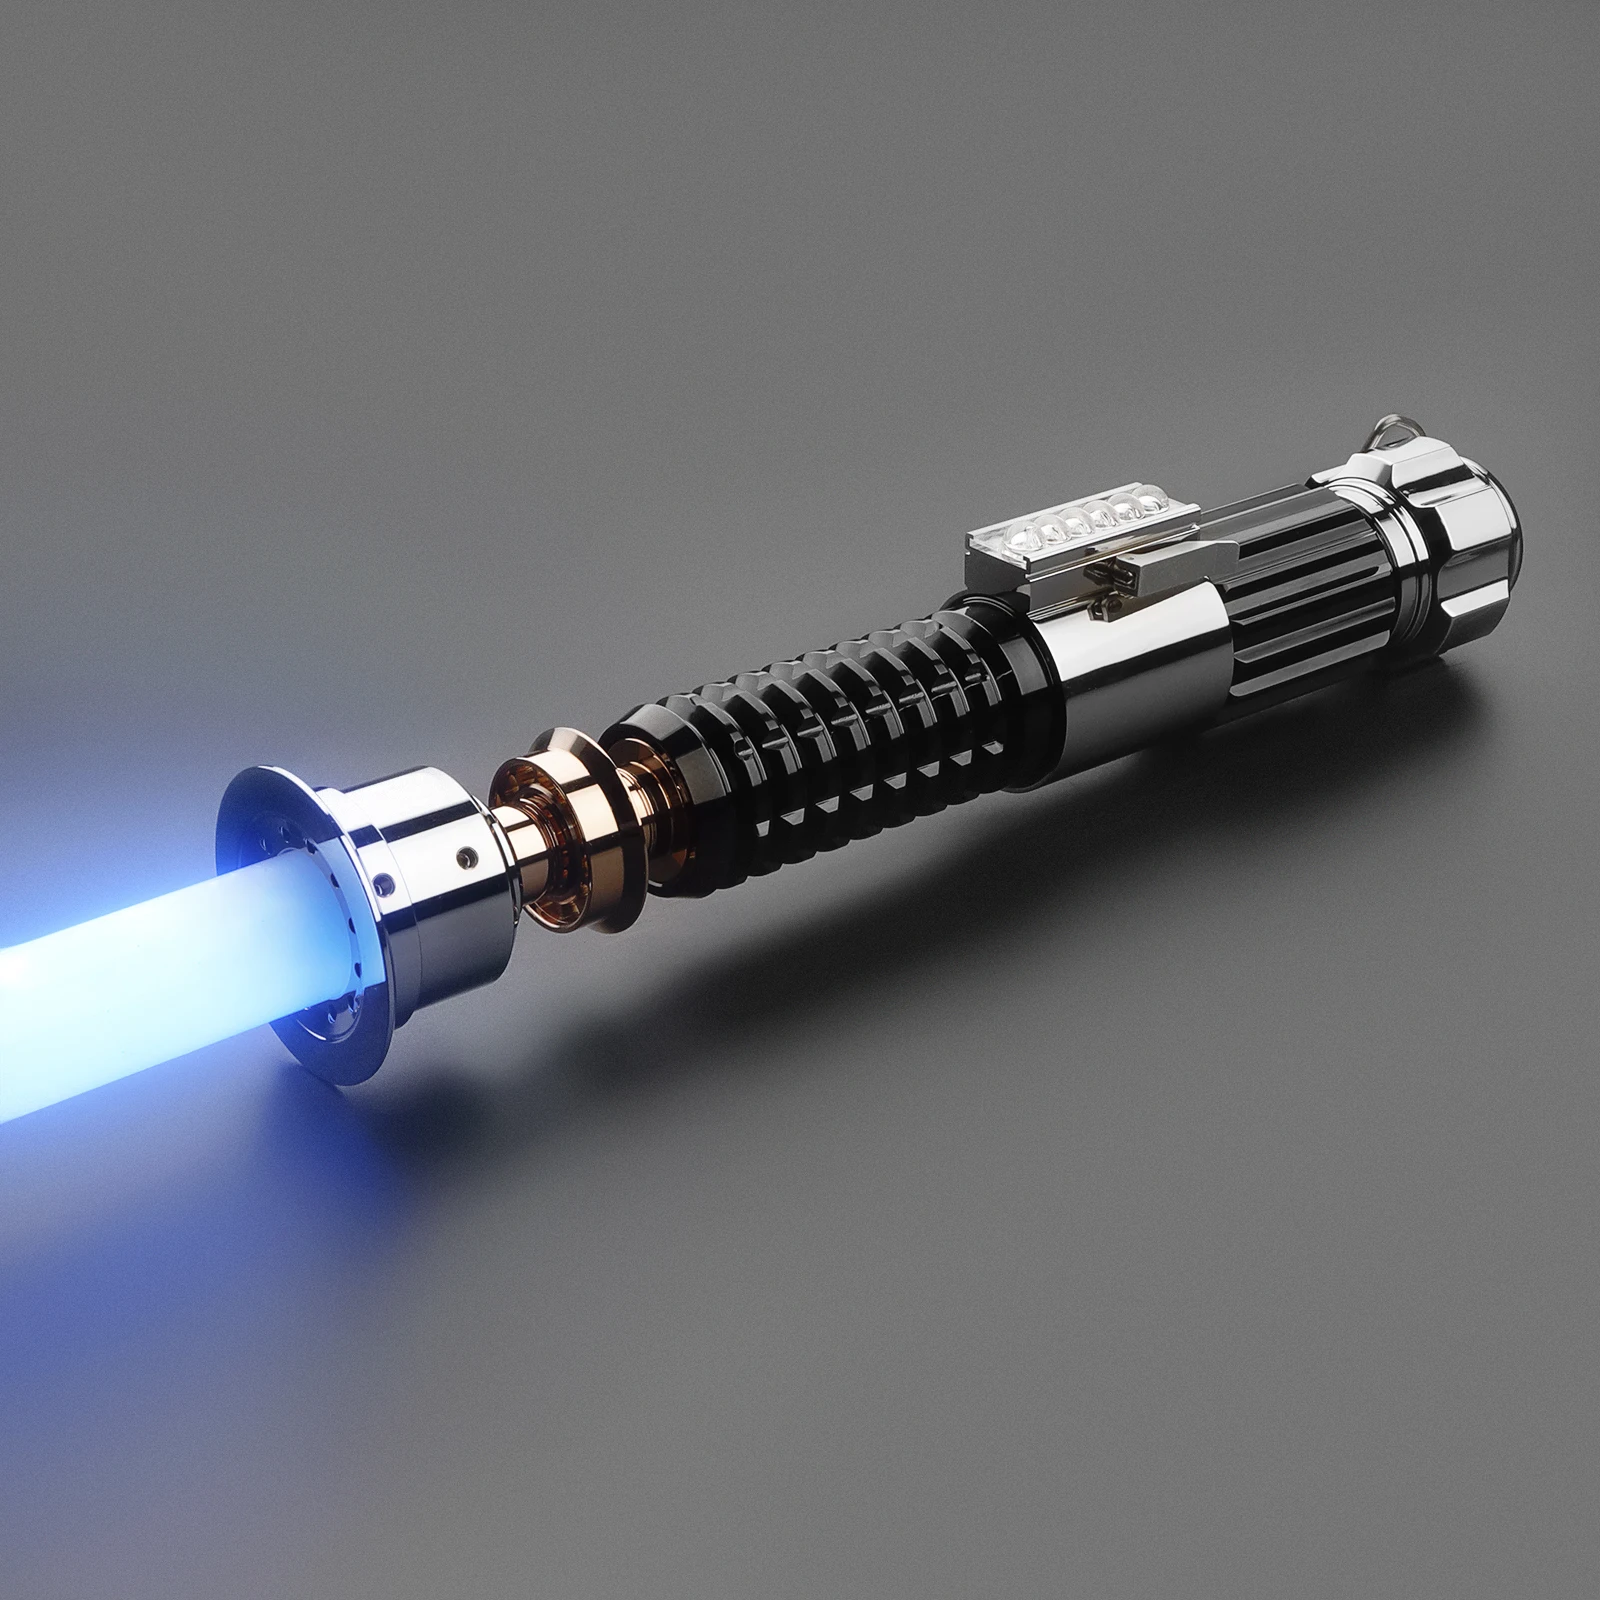 

DamienSaber Obi-Wan Lightsaber Xeno3.0 Pixel Force Heavy Dueling Light Saber Sensitive Smooth Swing Hilt with 34 Sound Fonts